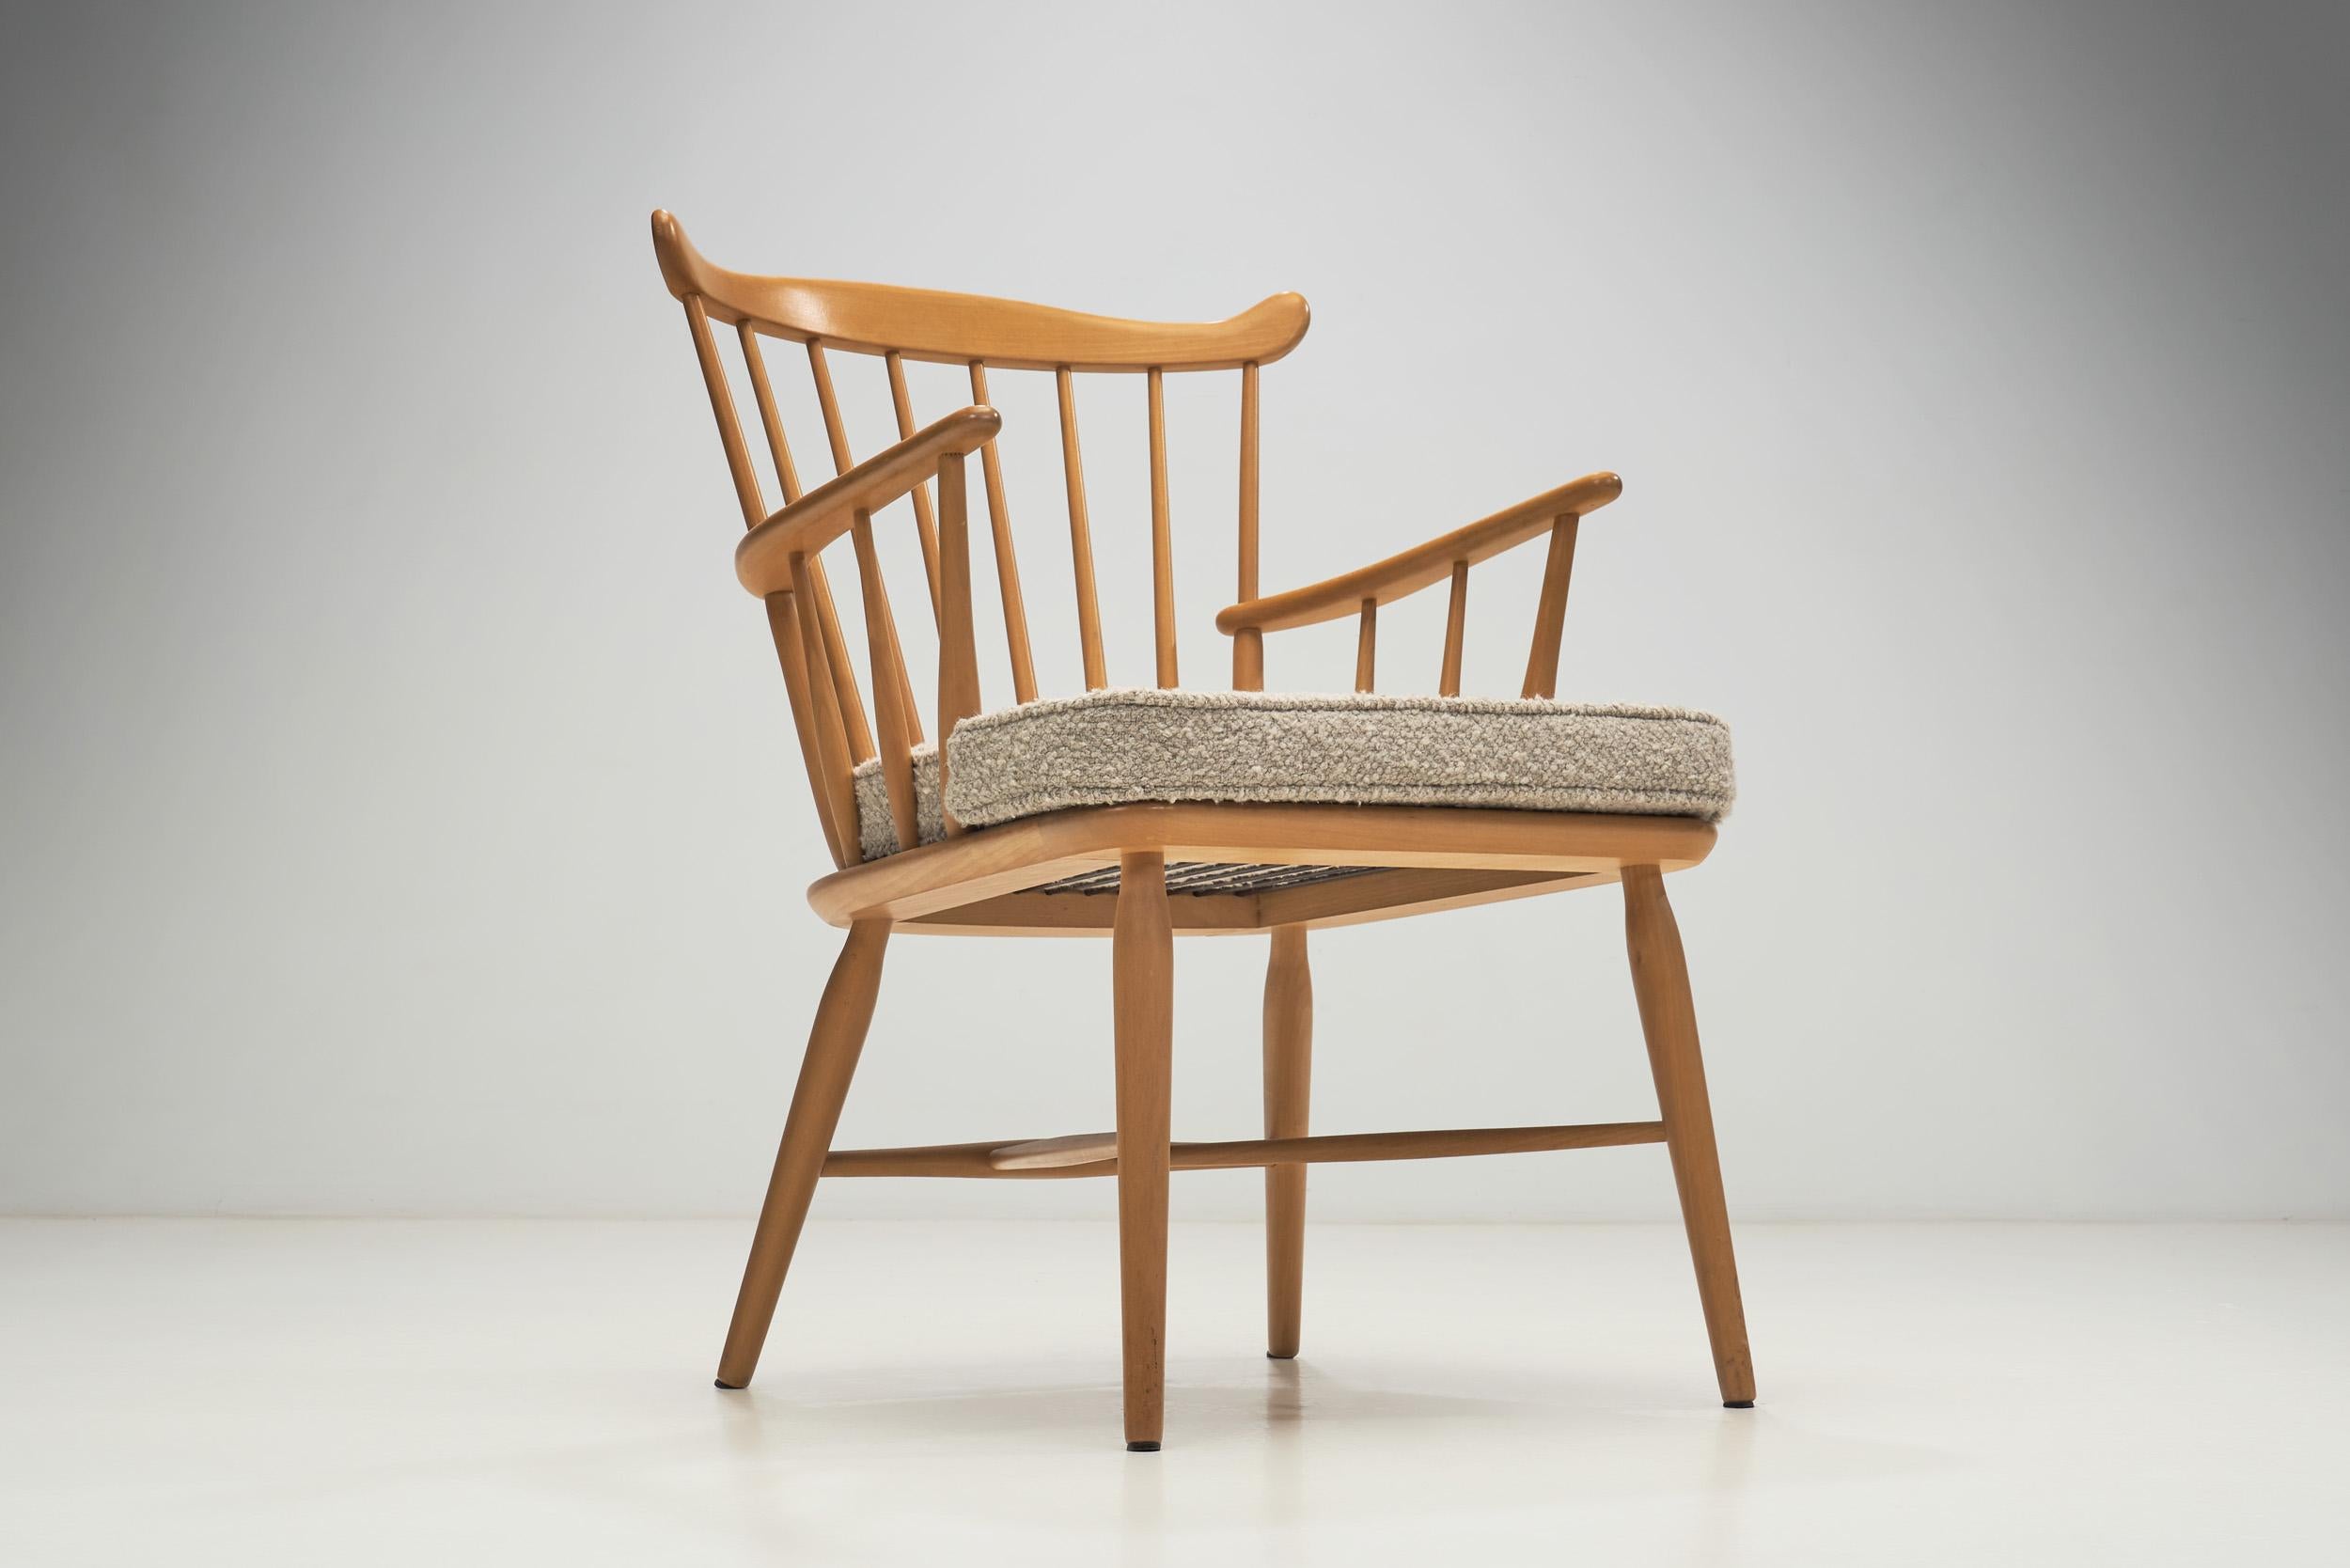 Beech Slatback Chairs by Børge Mogensen for FDB Møbler, Denmark 1960s For Sale 6